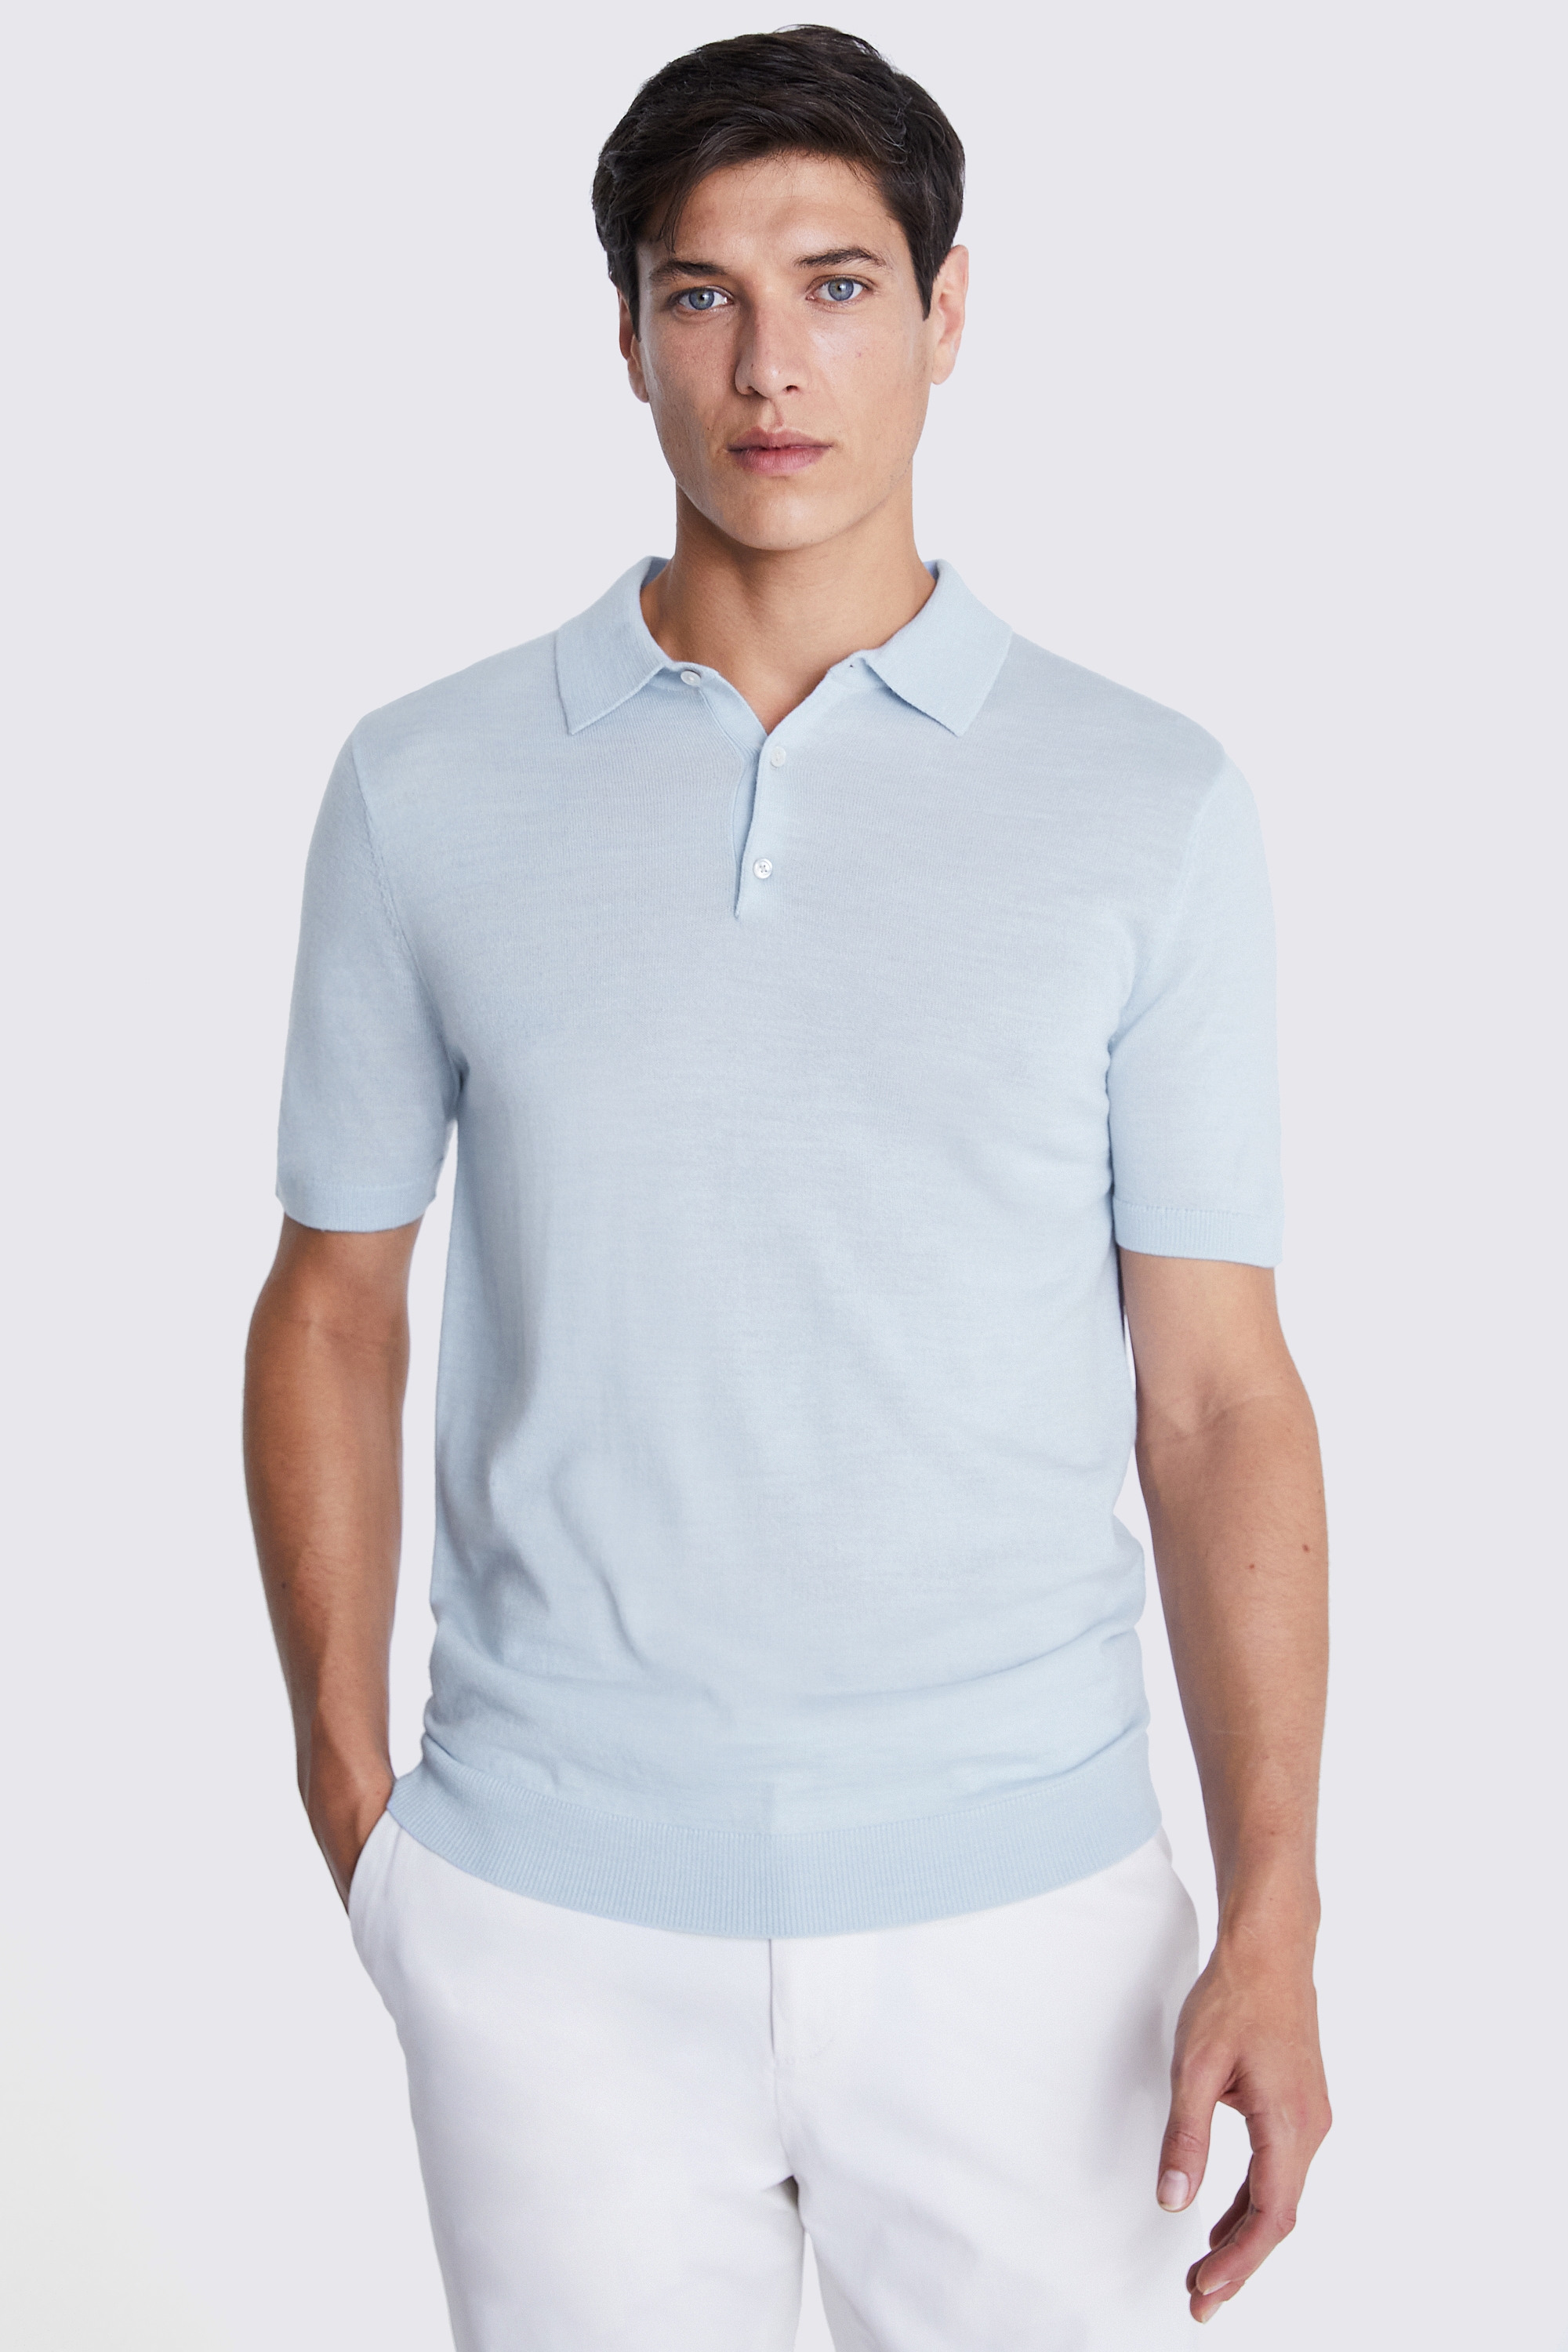 Sky Blue Merino 3 Button Polo Shirt | Buy Online at Moss